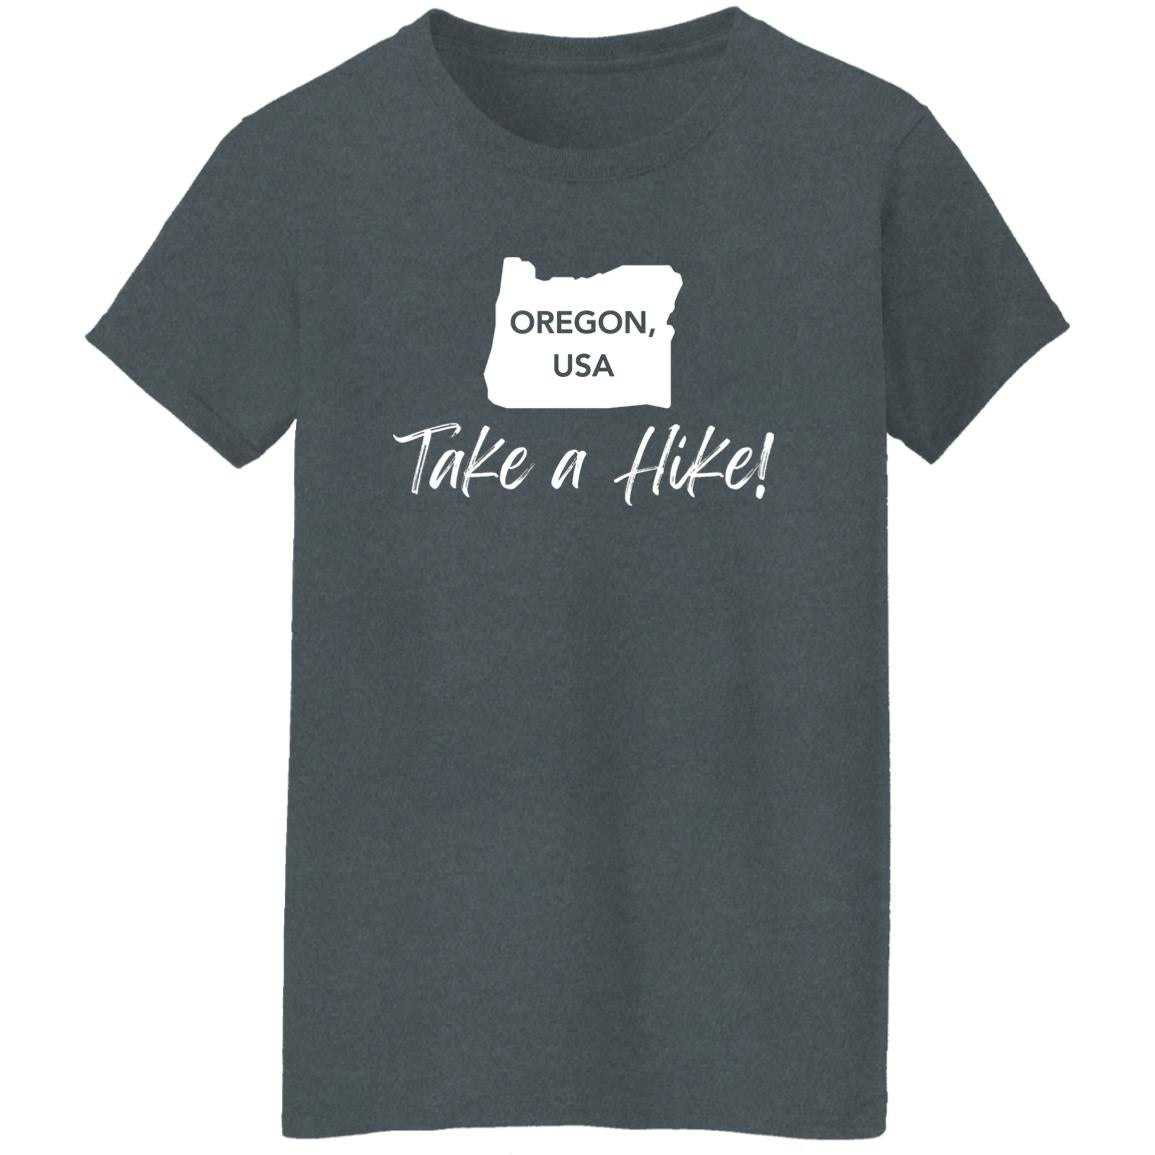 Adventurer Ladies' 5.3 oz. T-Shirt - Take a Hike Oregon white print